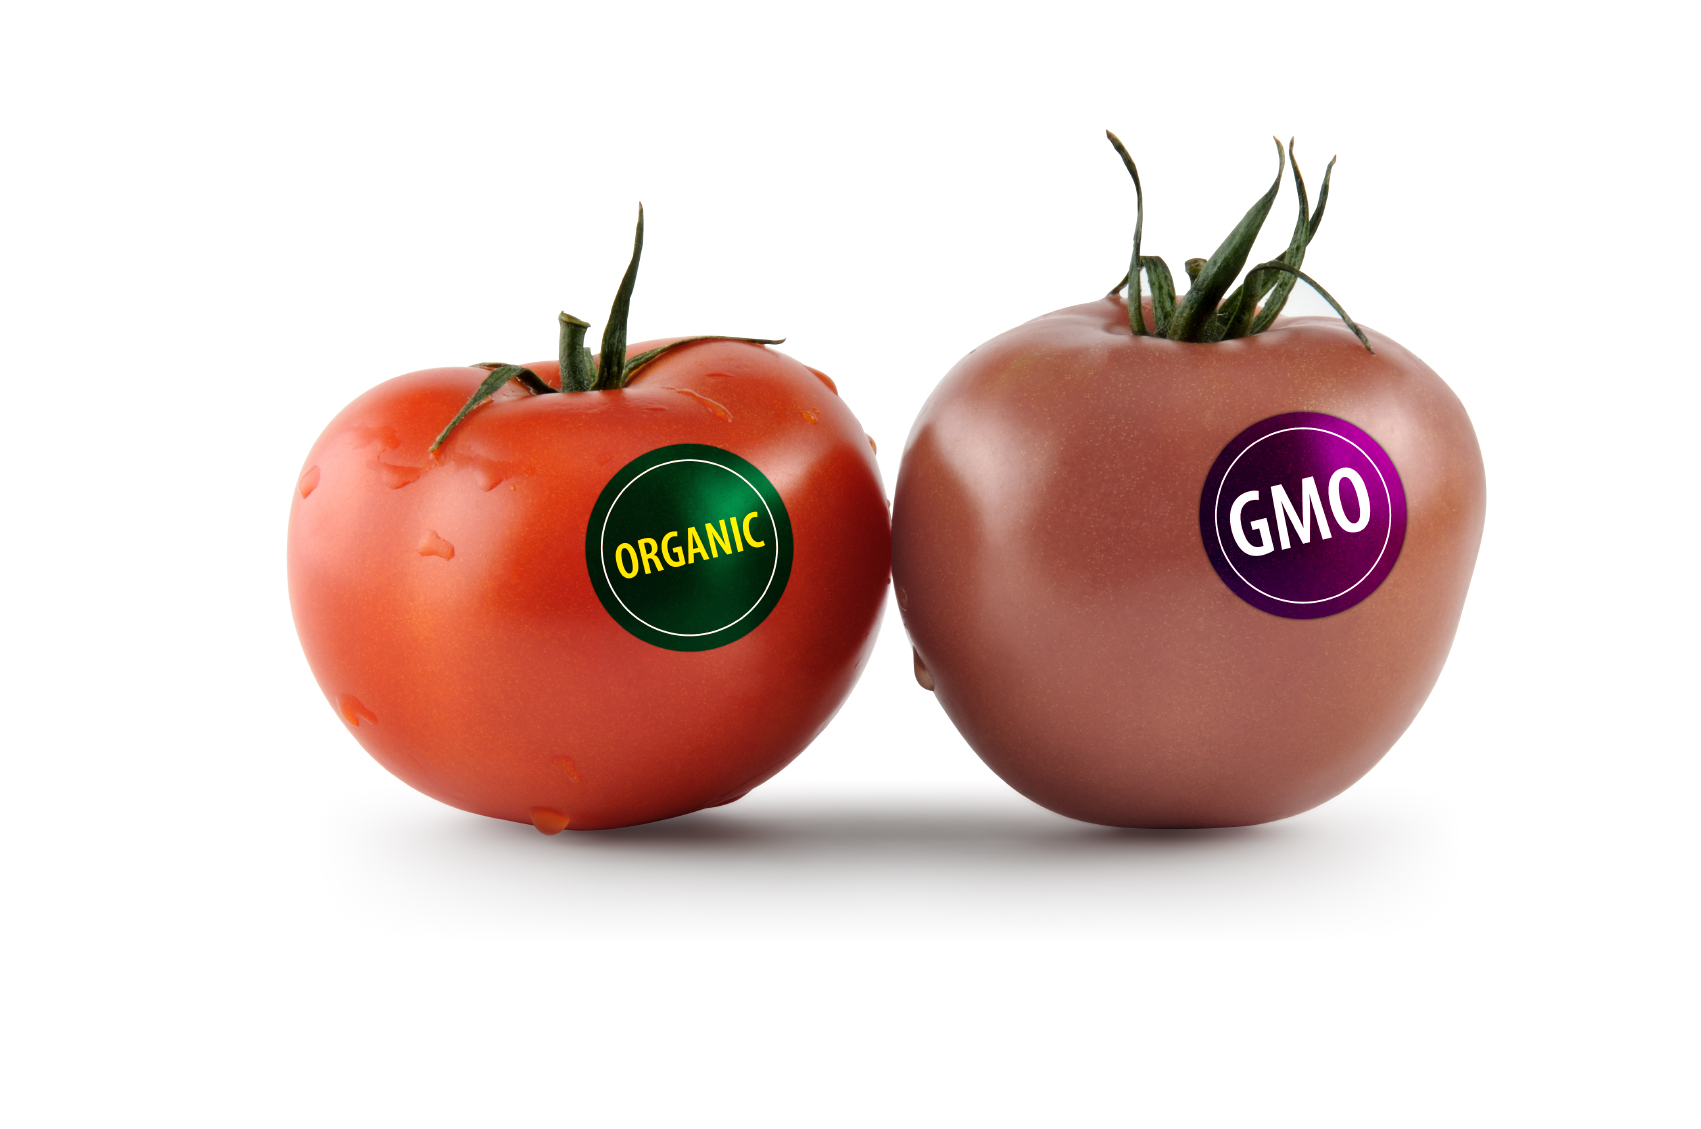 Produsele alimentare modificate genetic - argumente pro, contra, pericole